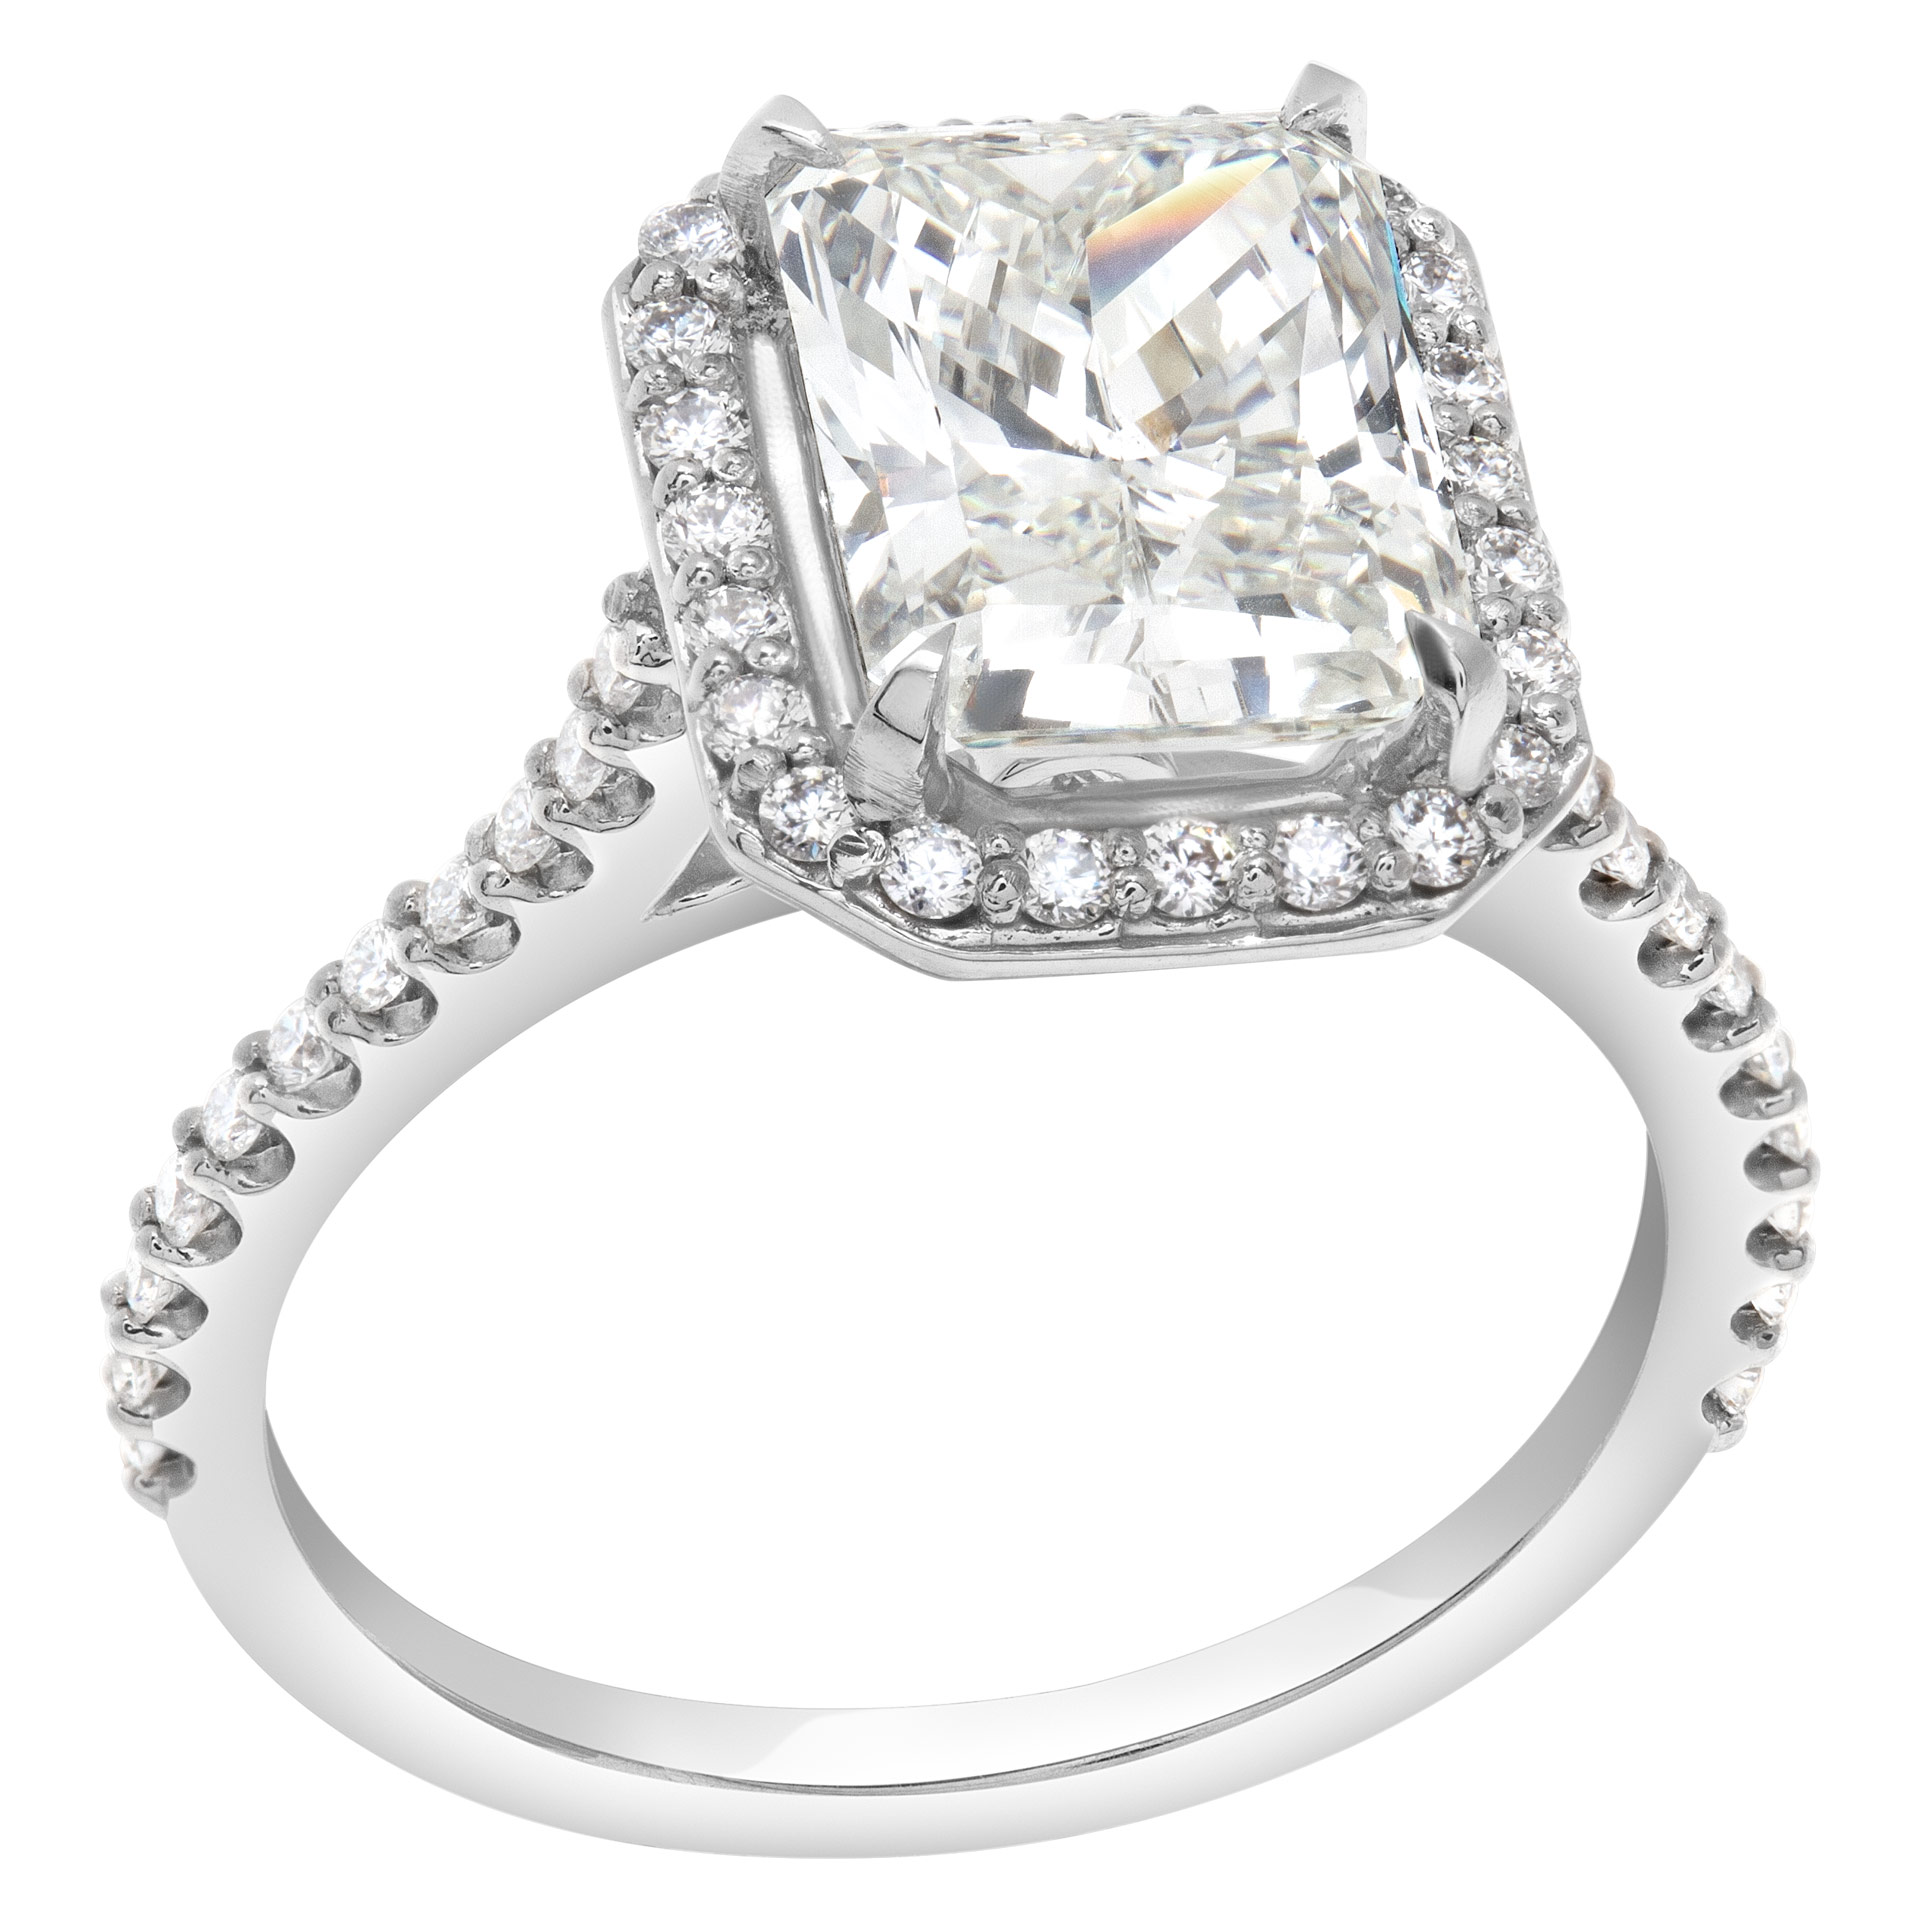 GIA certified cut- cornered rectangular modified brilliant cut diamond 3.01 carat (I color, VS2 clarity image 3